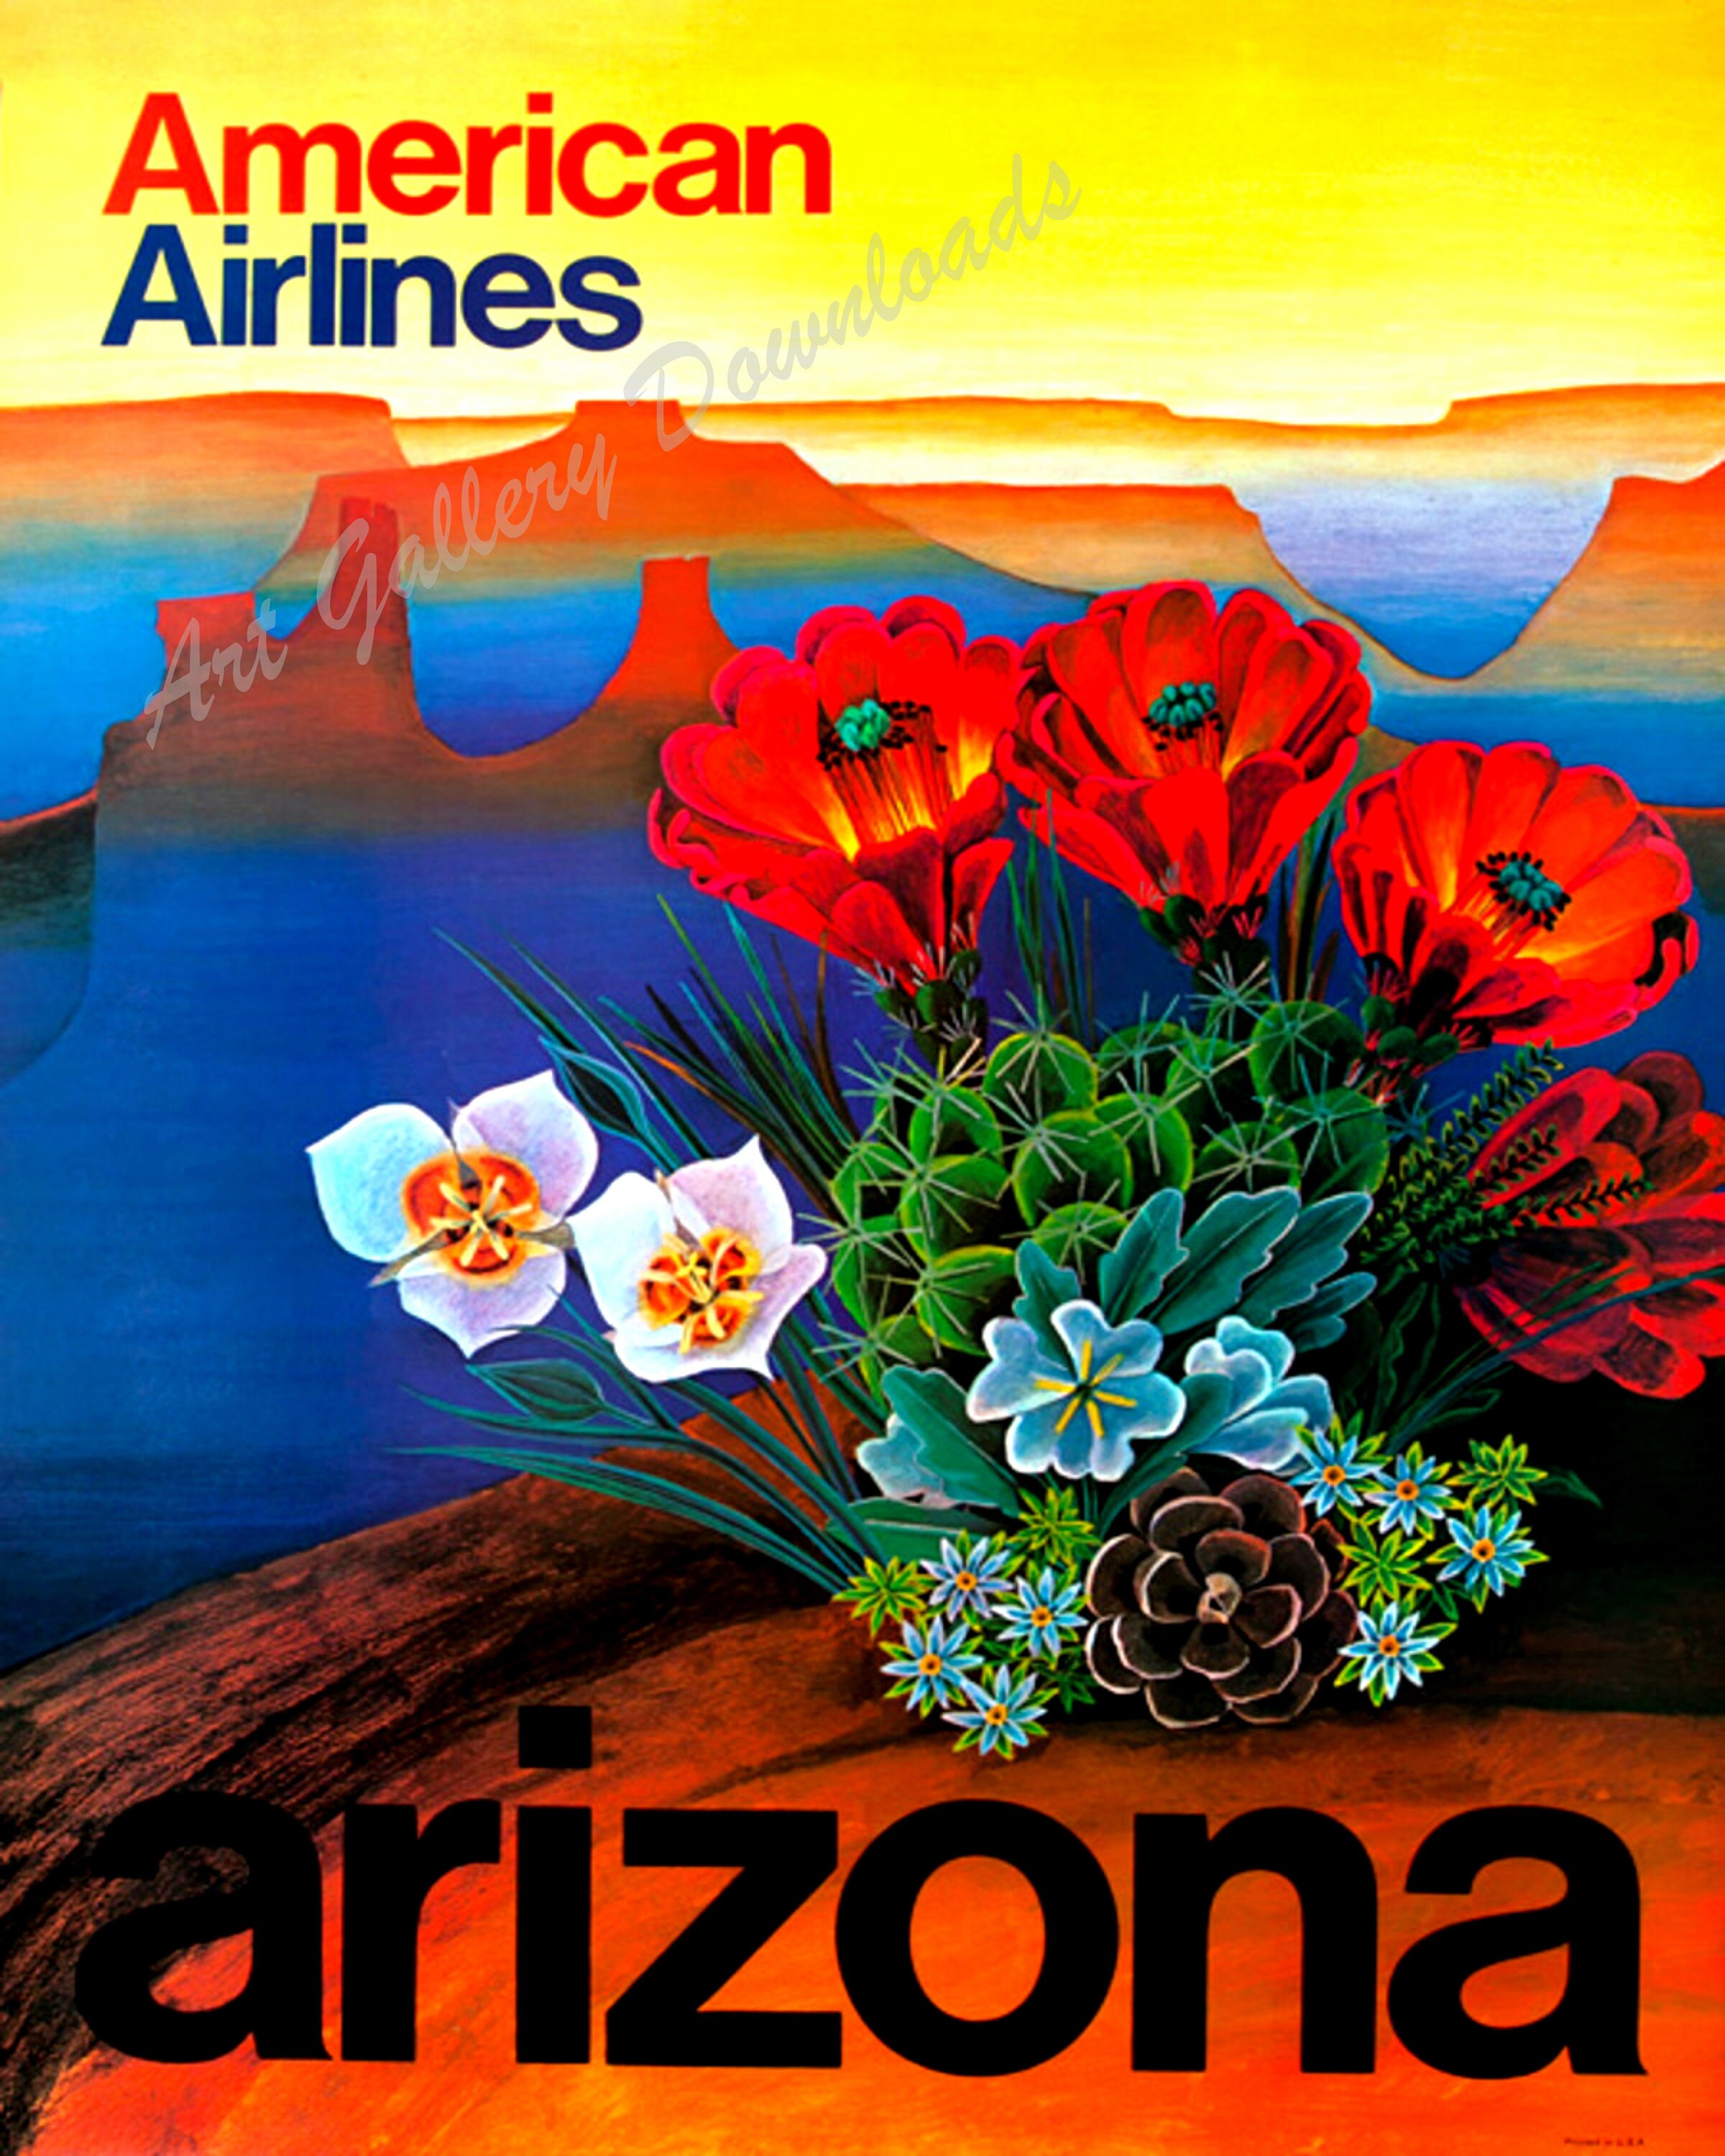 Arizona Southwest United States America Vintage Travel Advertisement Art Poster 